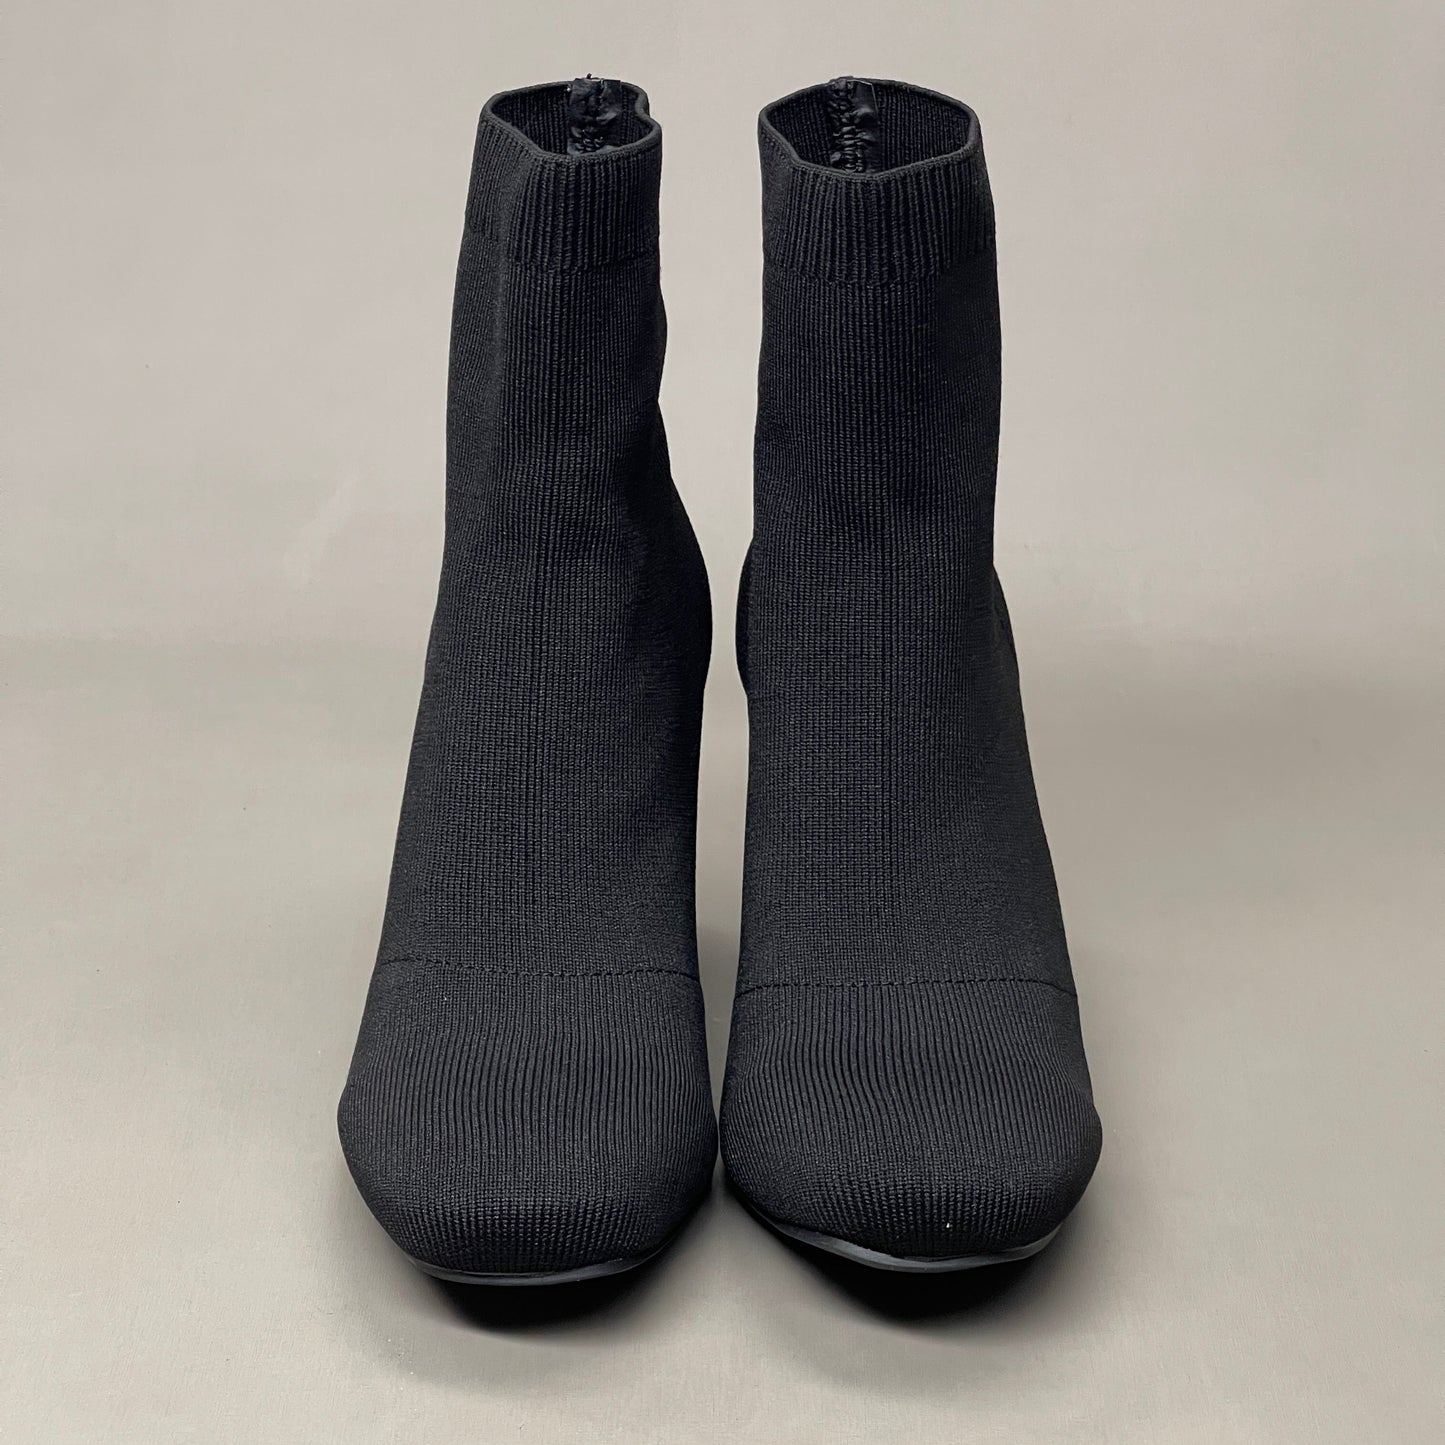 MIA Erika Fly Knit Booties Dress Boots Black 2” Heel Sz 6.5 GS7553115Y (New)